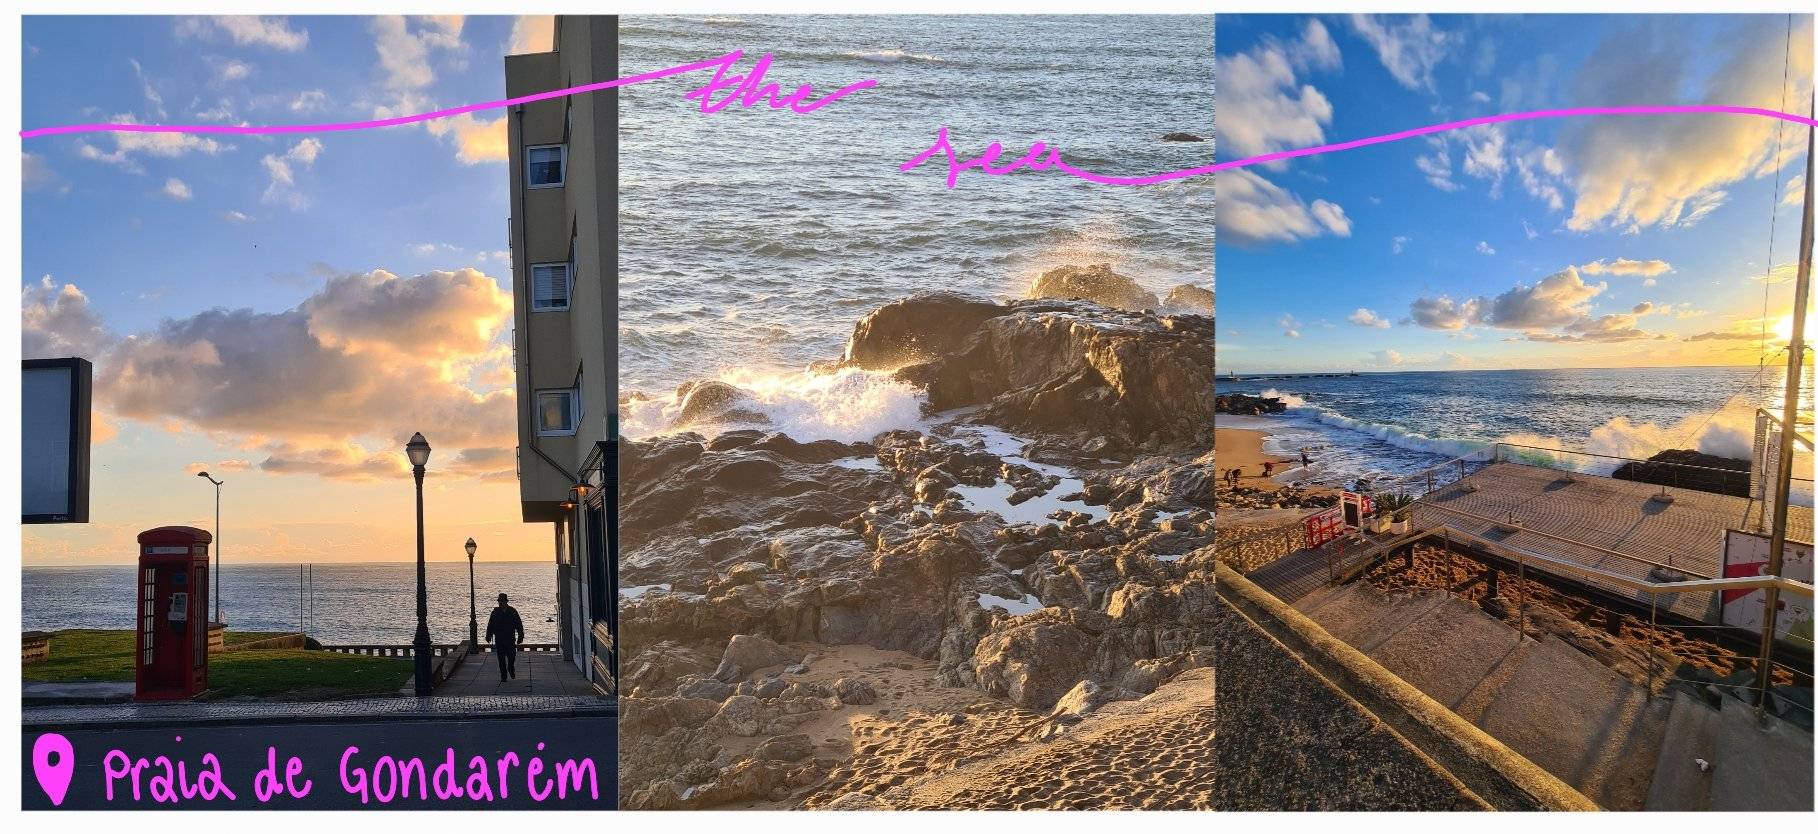 composite image of beach views at sunset with heading 'the sea' and google maps-like symbol reading 'praia de gondarem'